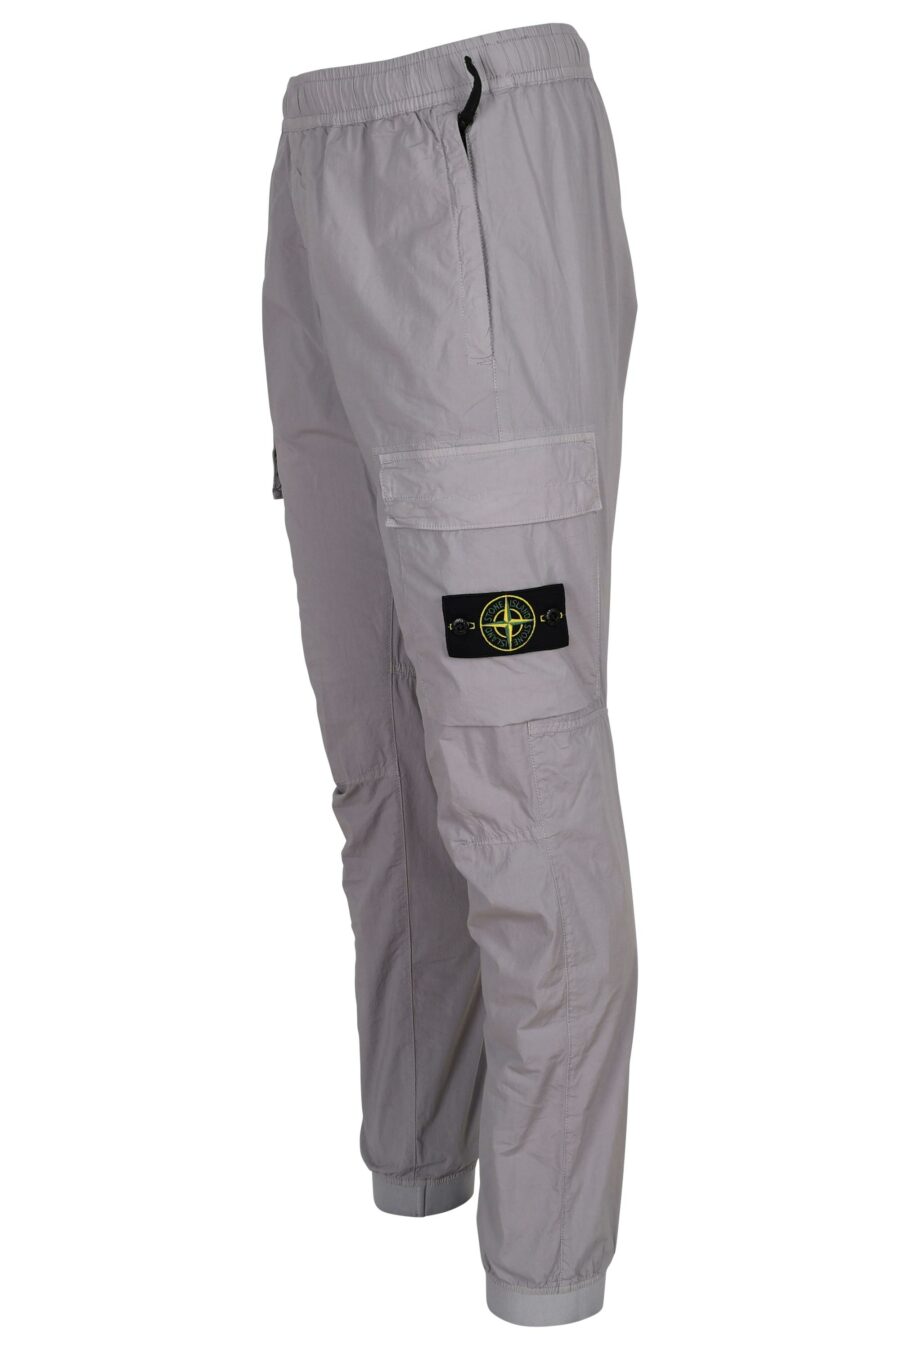 Pantalón lila grisáceo "tapered" con logo parche brújula - 8052572926846 2